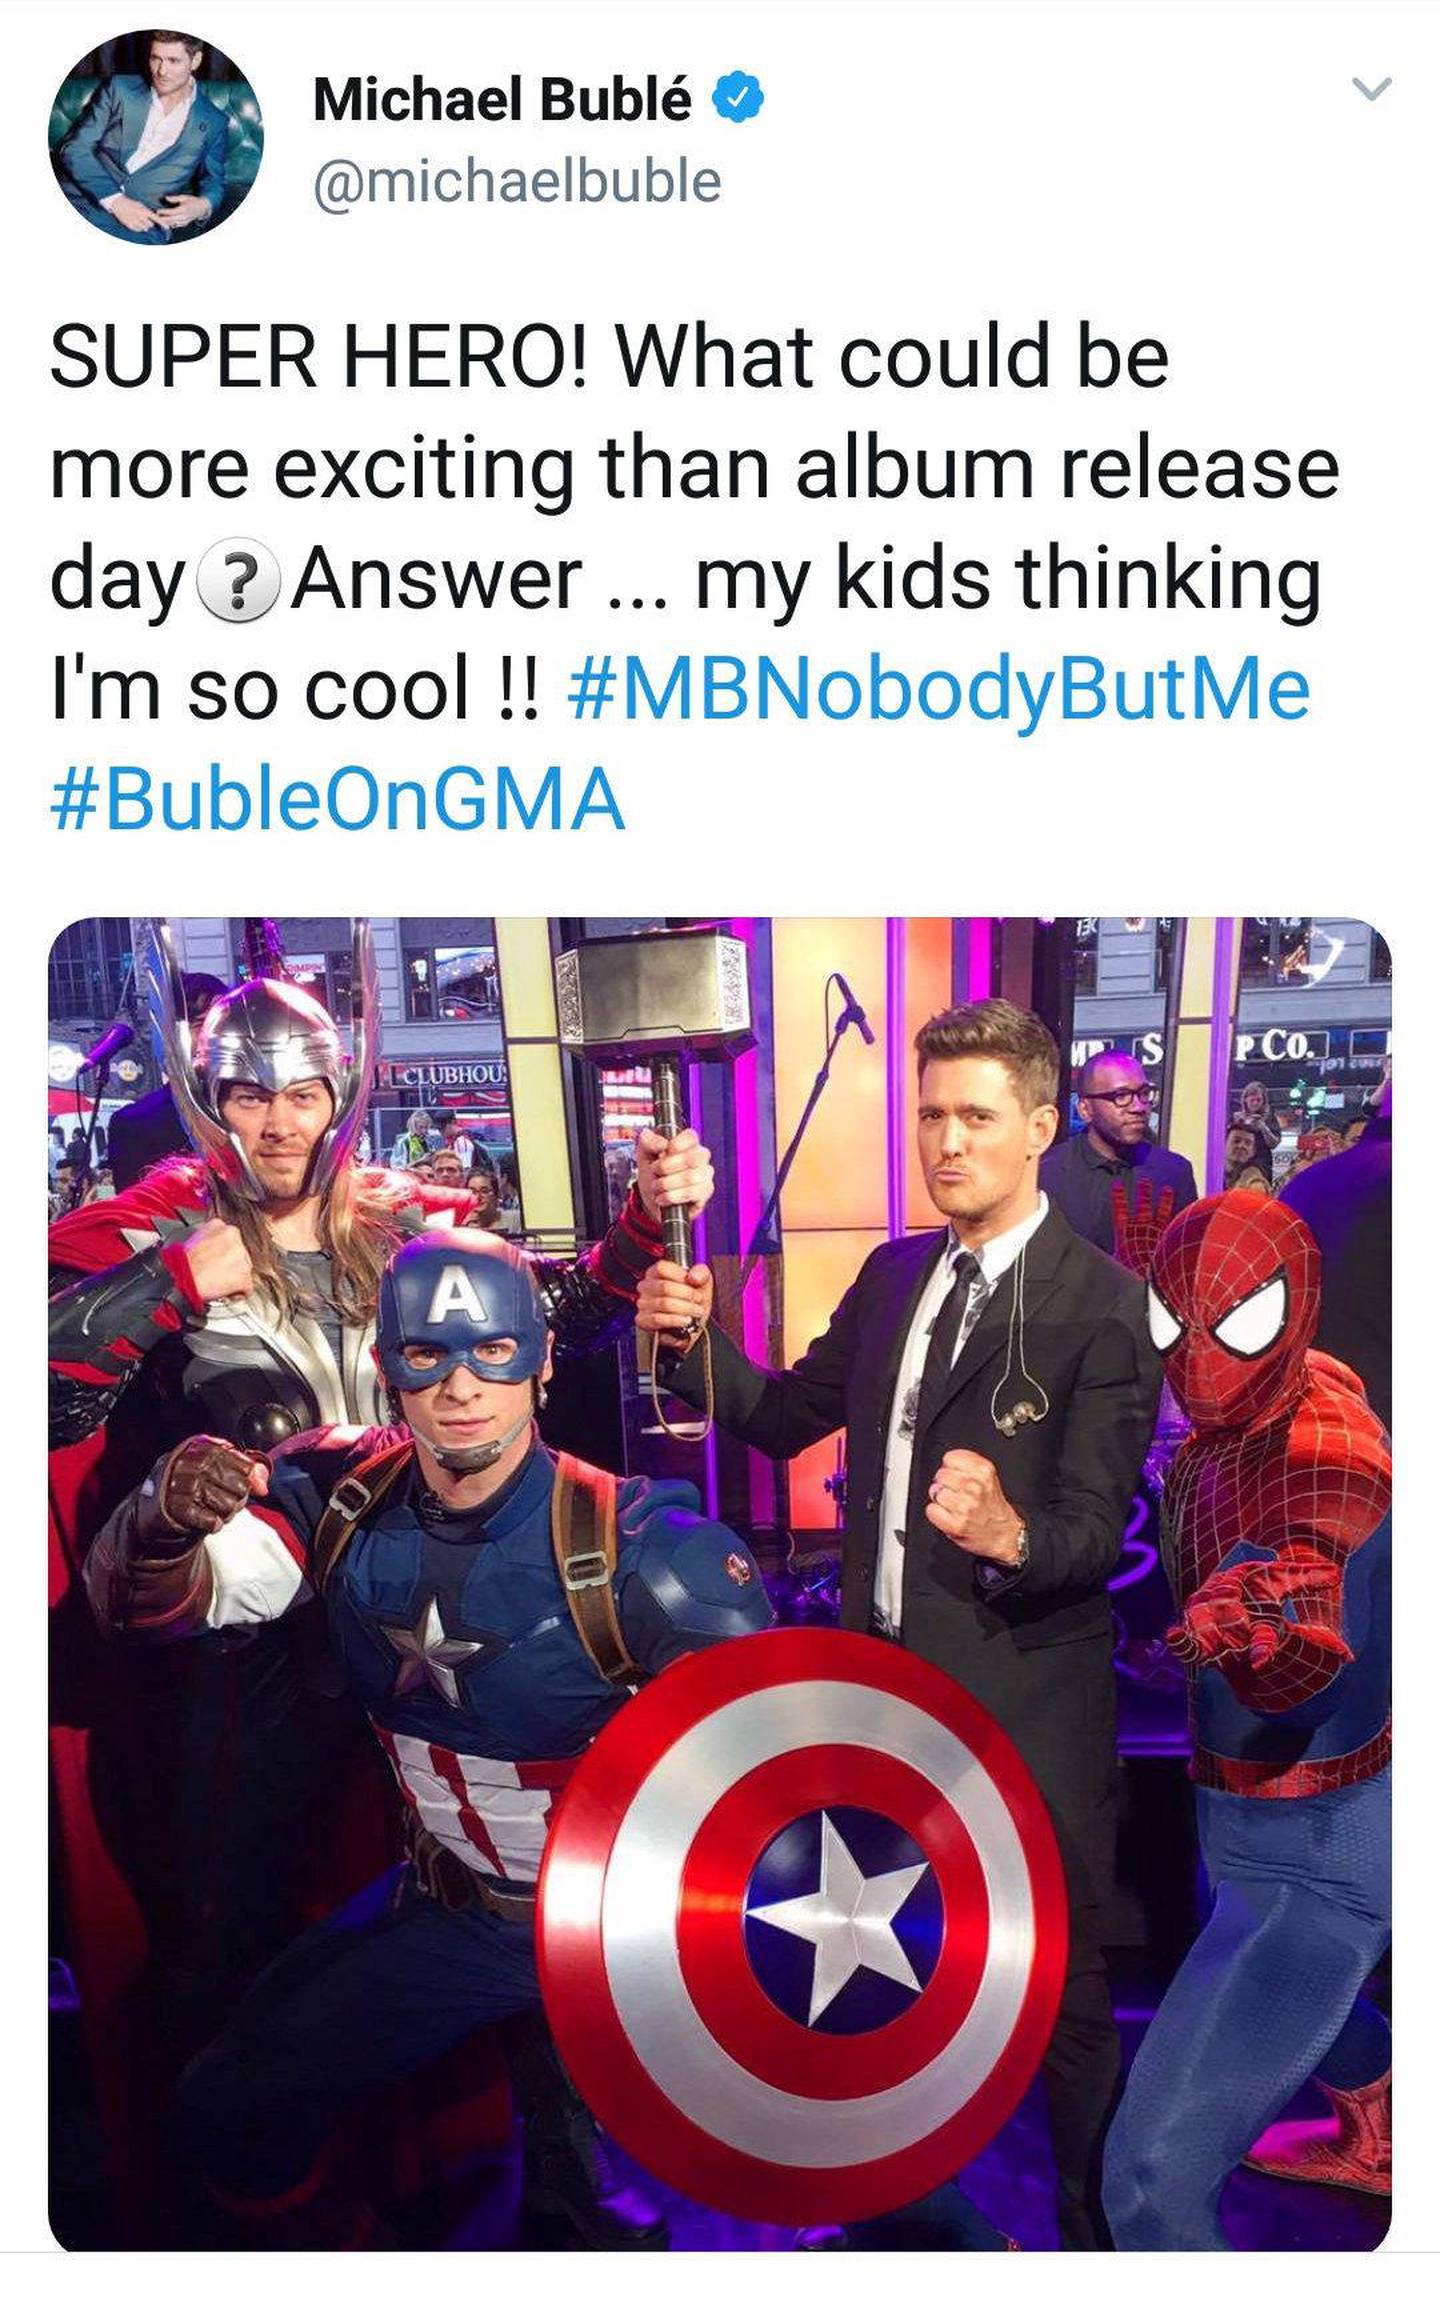 Michael Bublé sammen med Thor, Captain America og Spider-Man – sannsynligvis hans eneste konkurrenter i populærkulturen i dag. FAKSIMILE: TWITTER